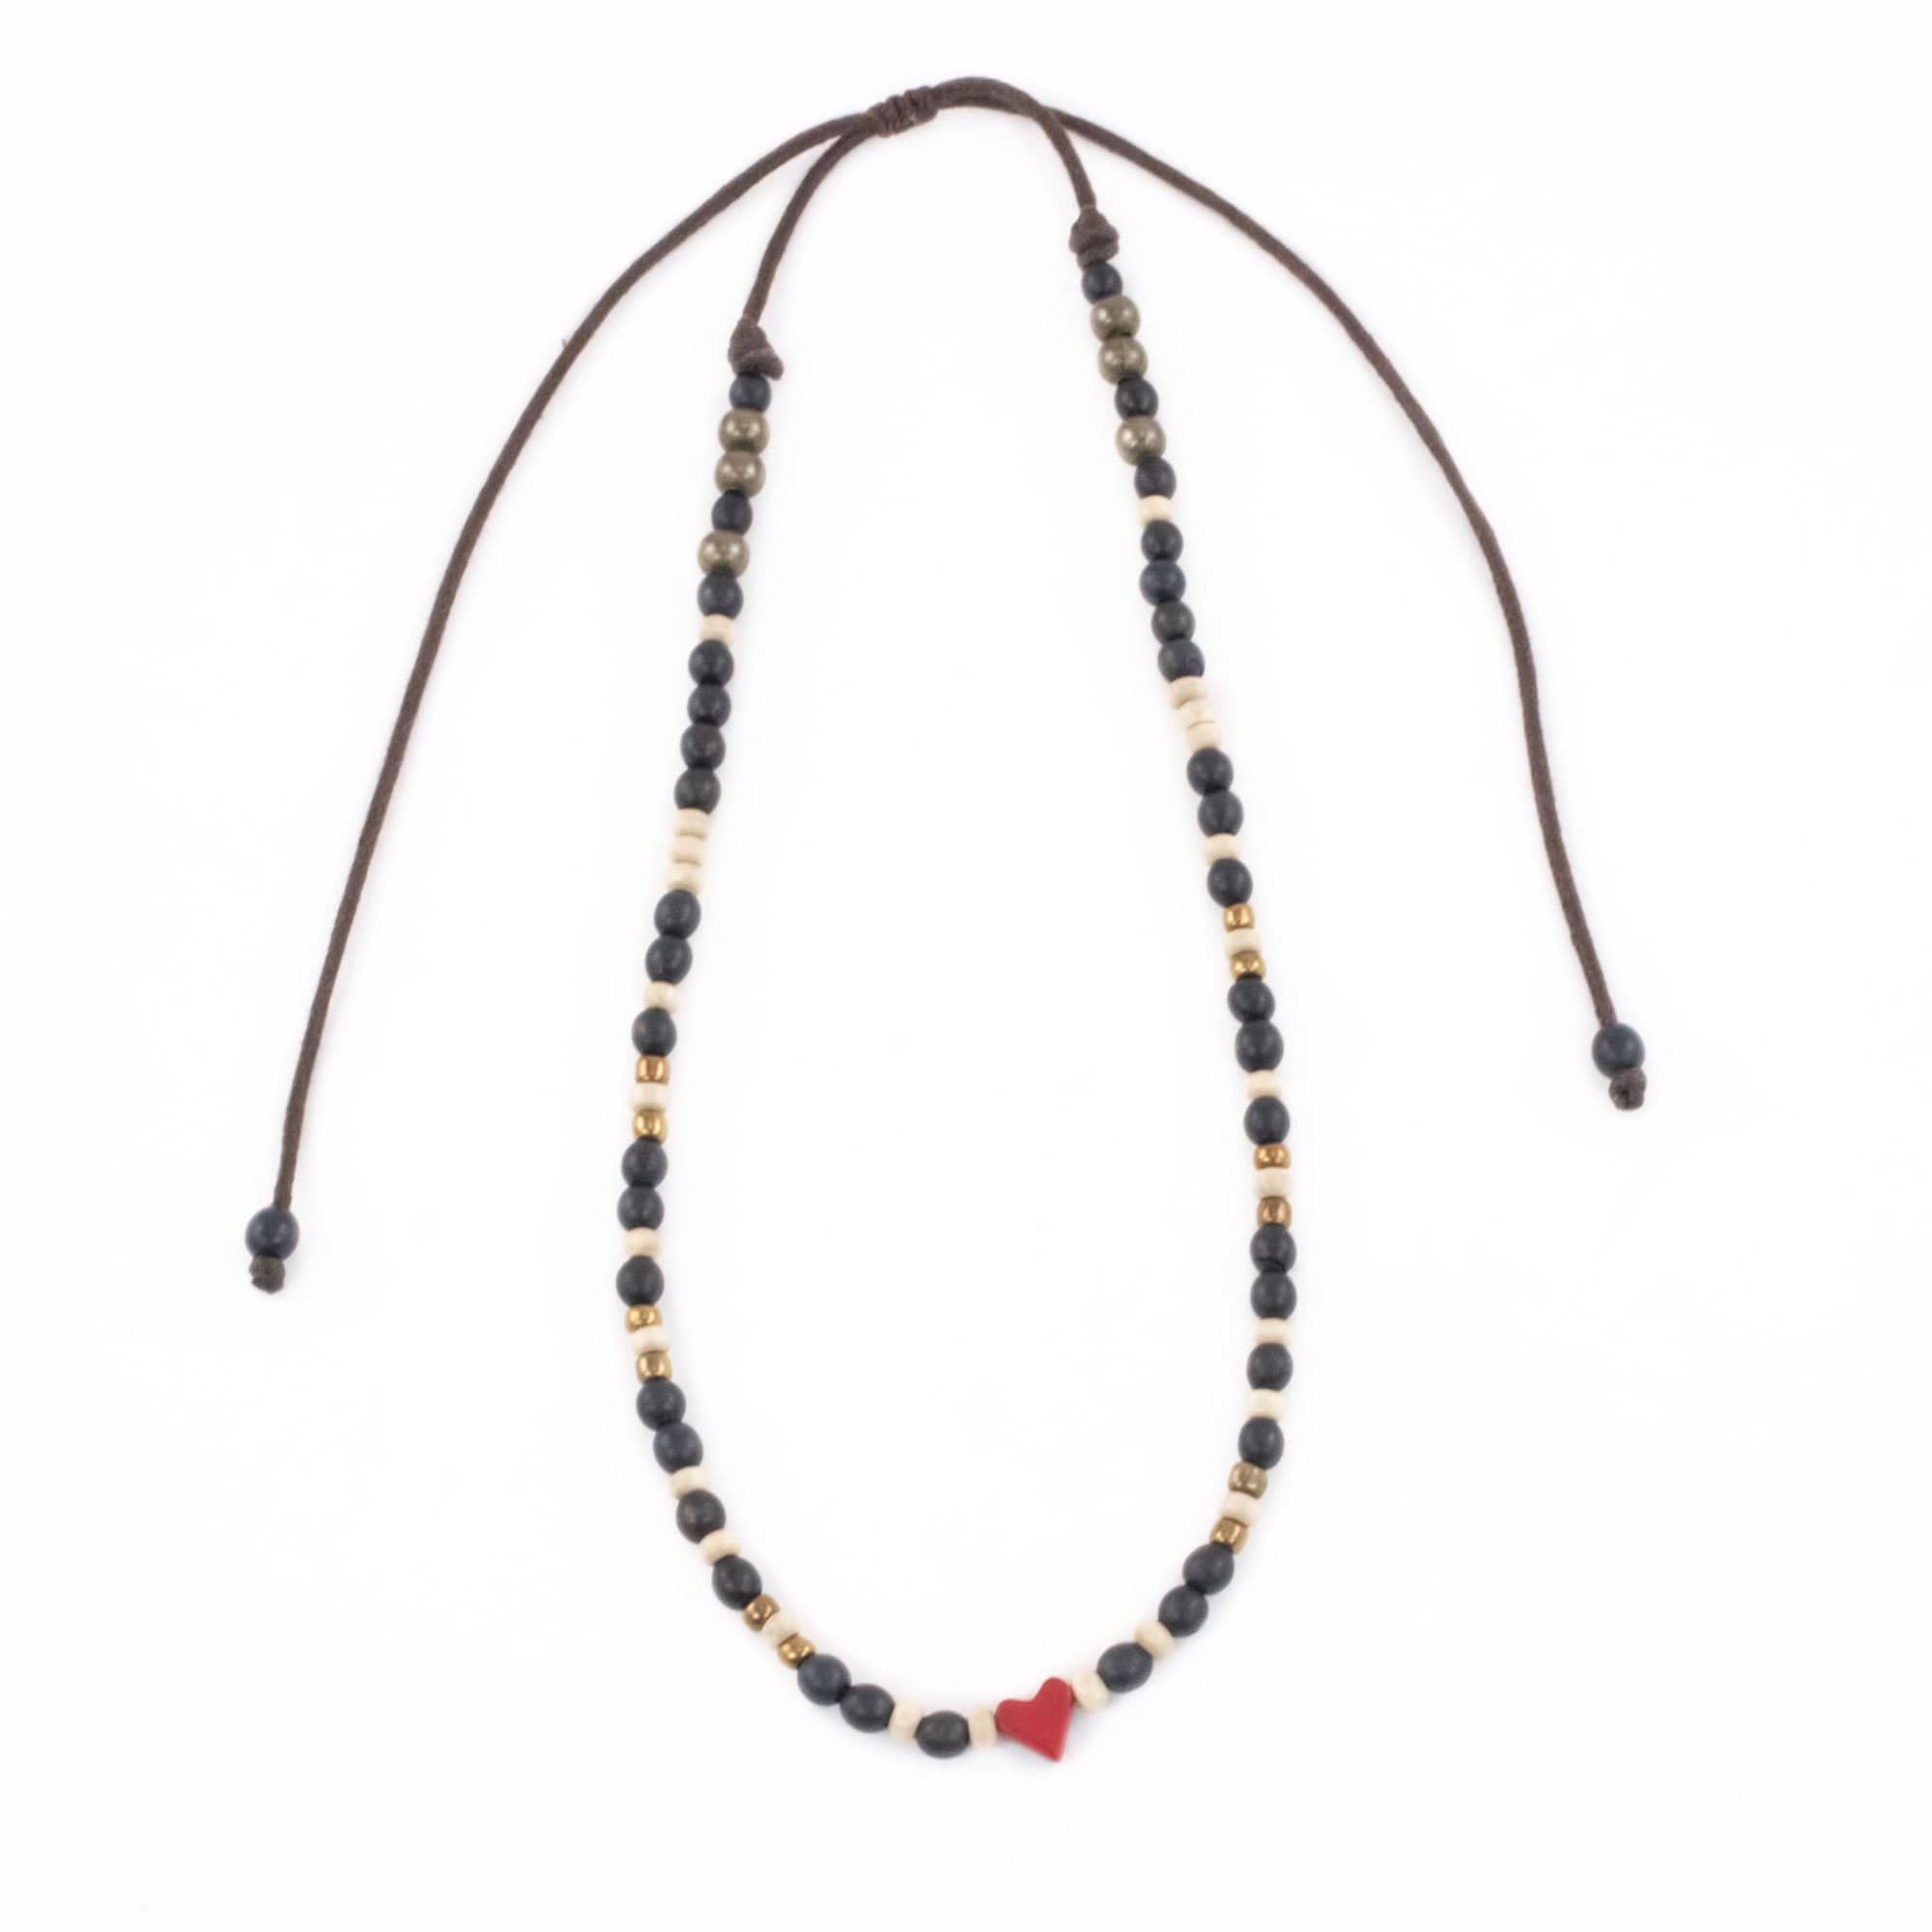 Tagua Heart Necklace & Bracelet Set